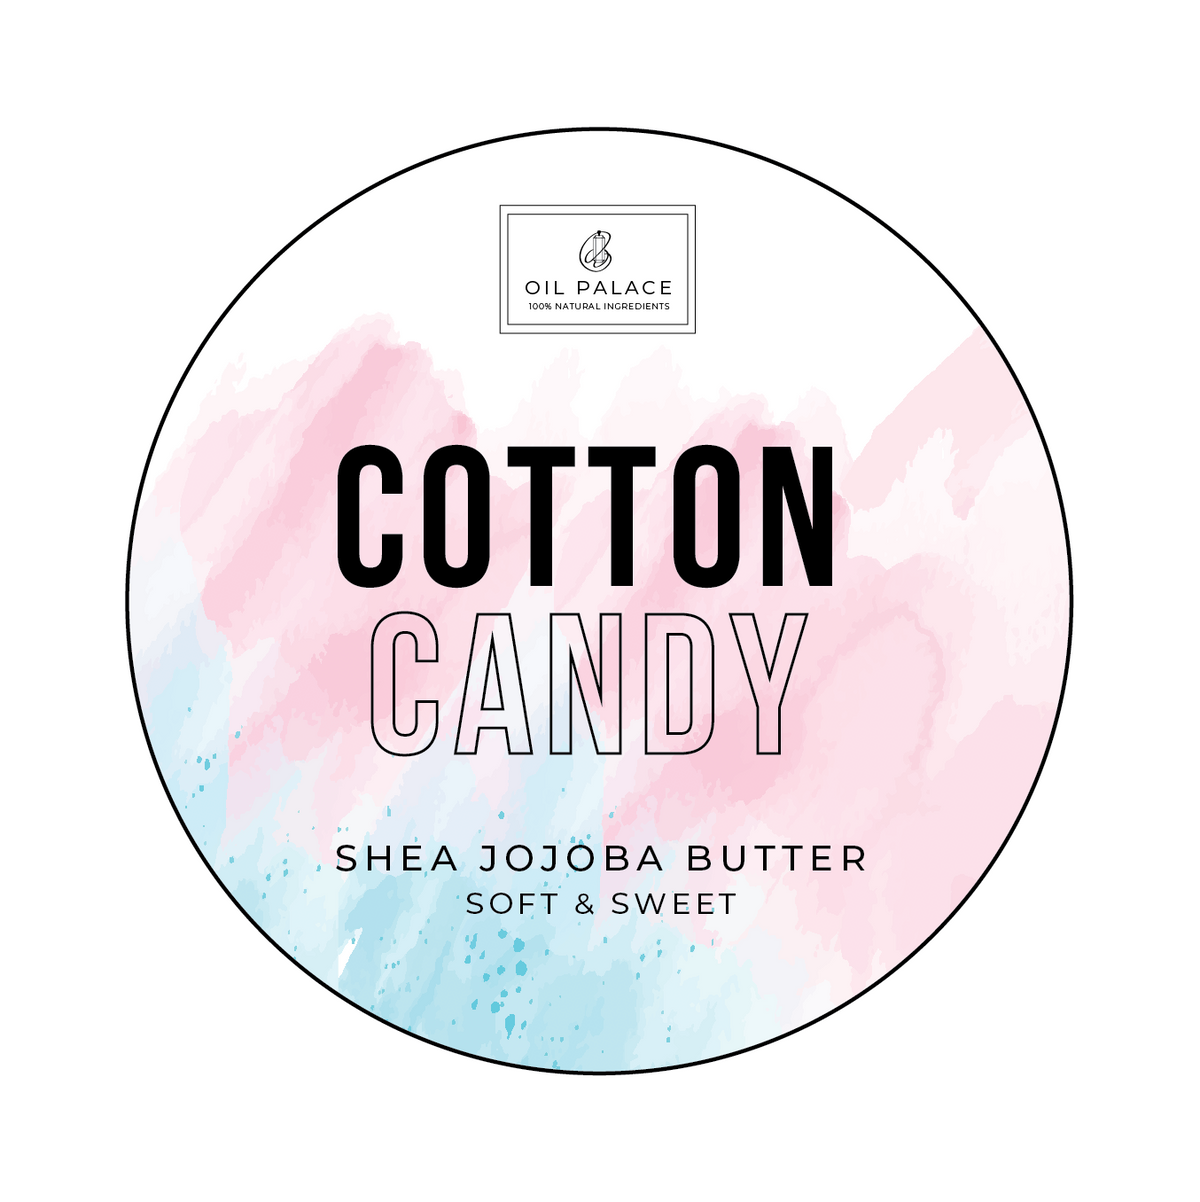 Cotton Candy Shea Jojoba Butter